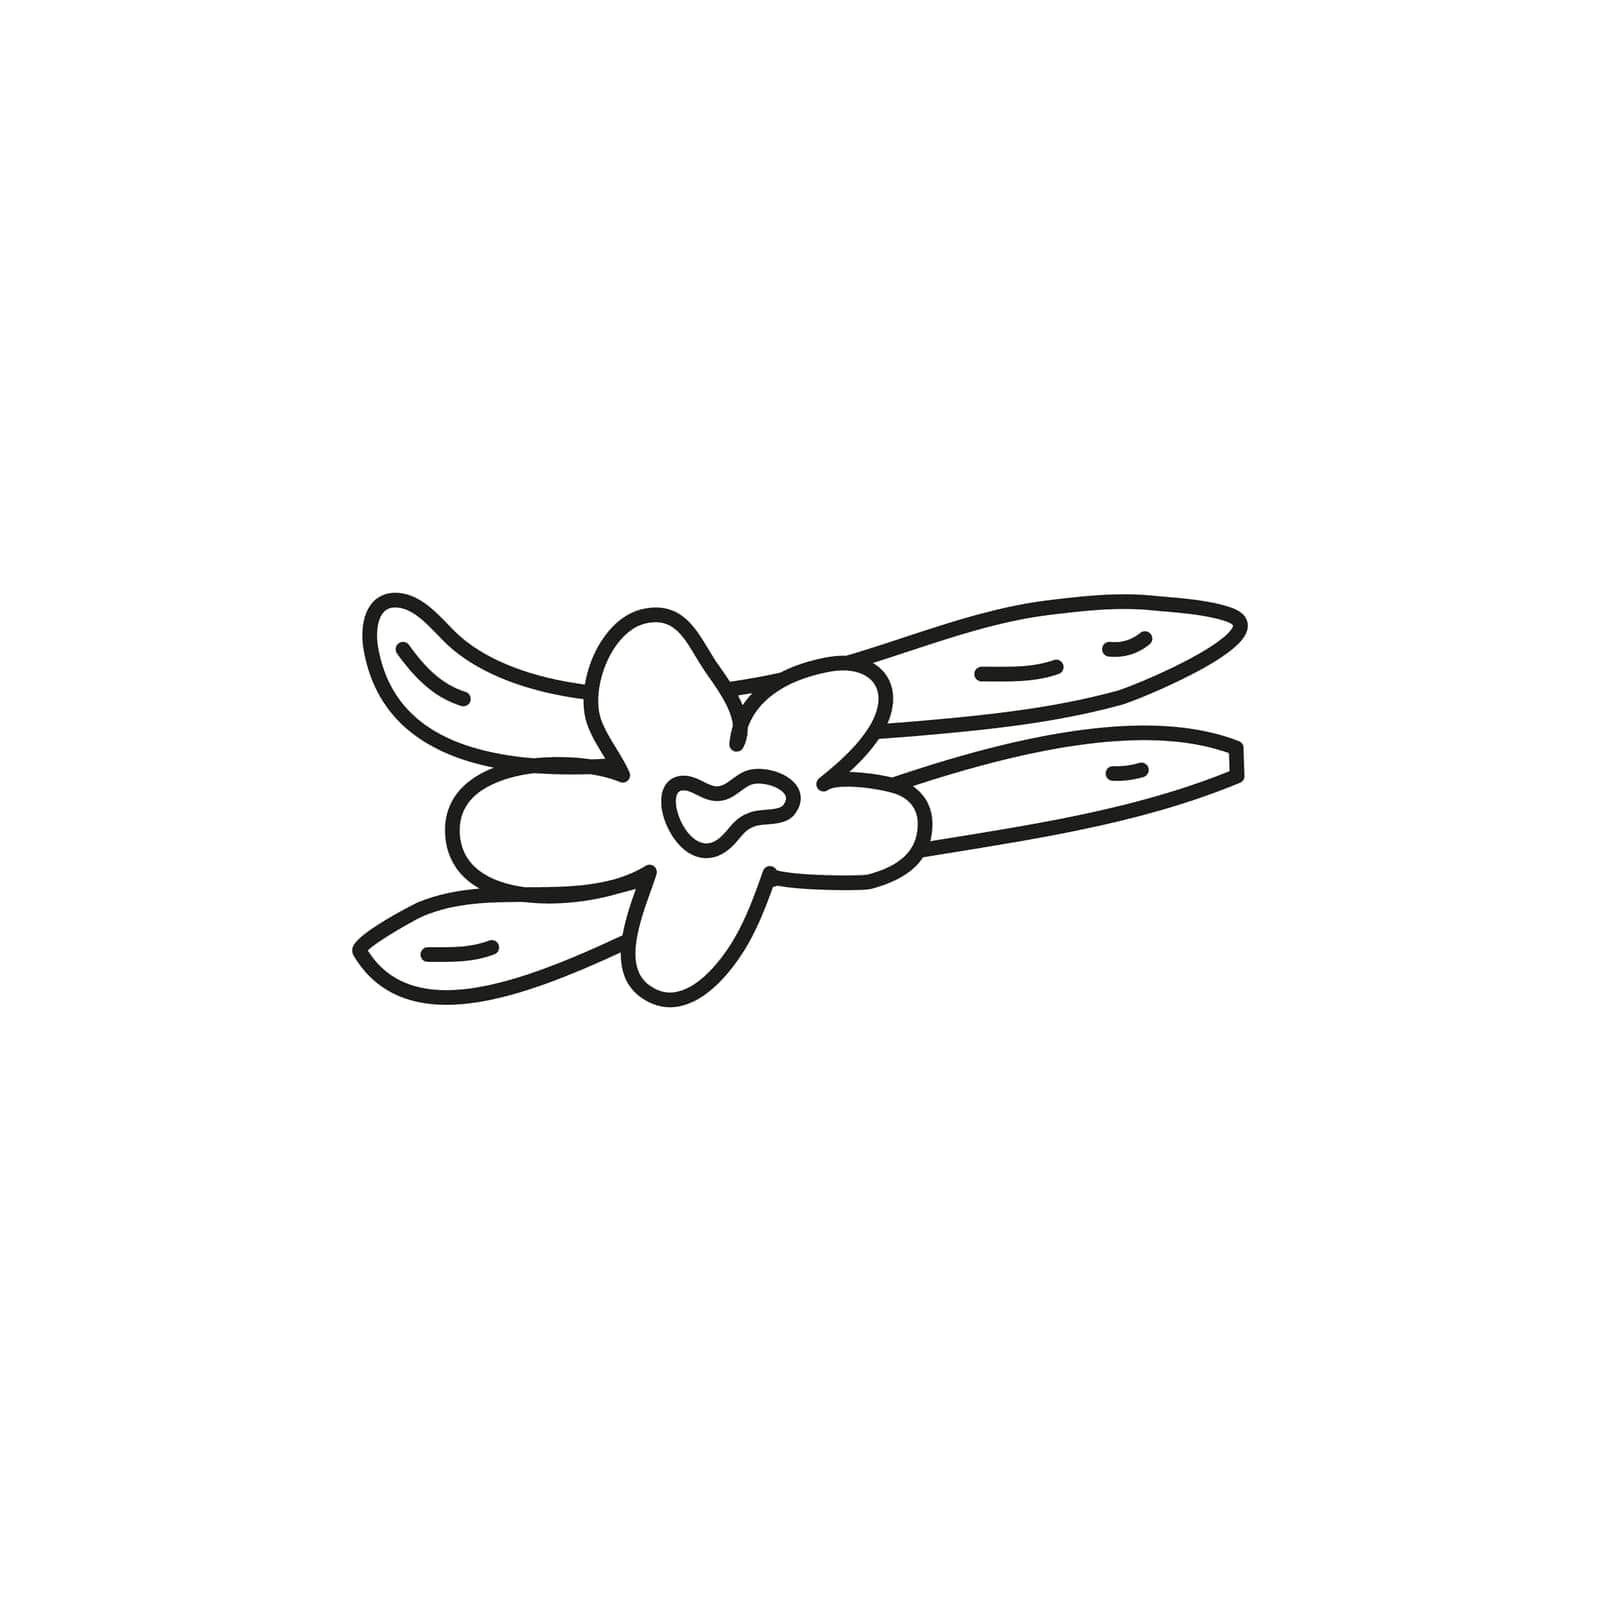 Doodle vanilla flower and sticks spice. by Minur